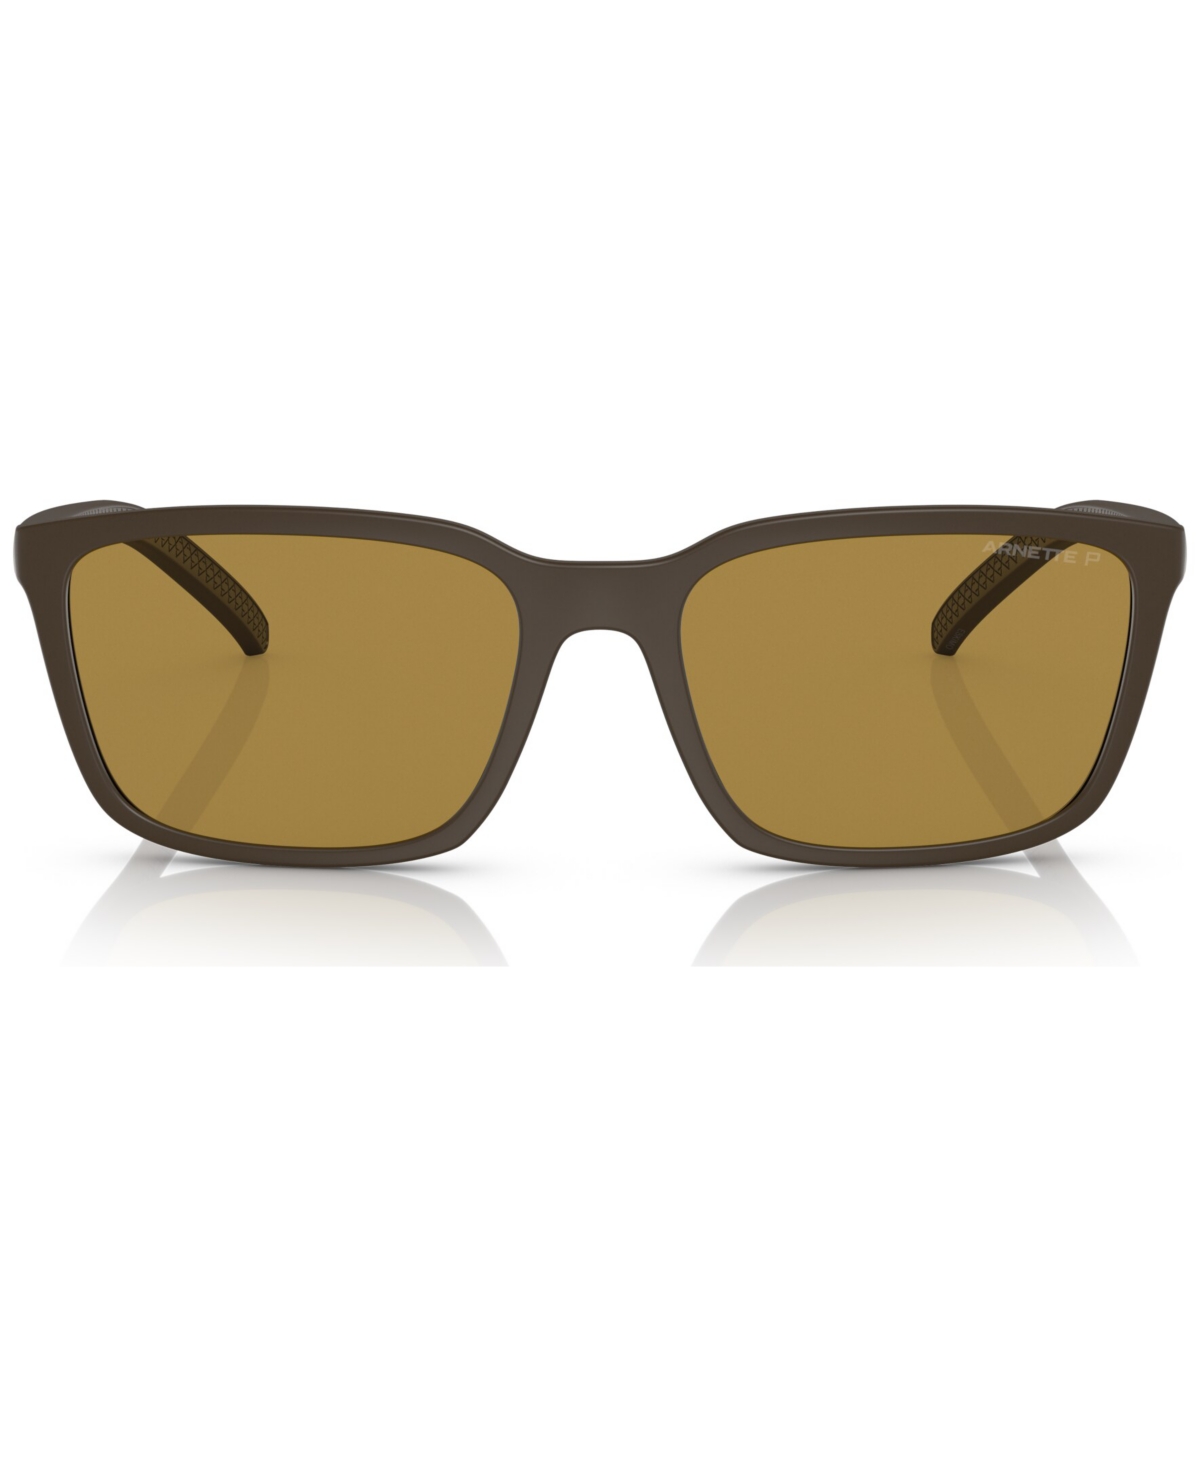 Men's Polarized Sunglasses, AN431156-p - Matte Brown